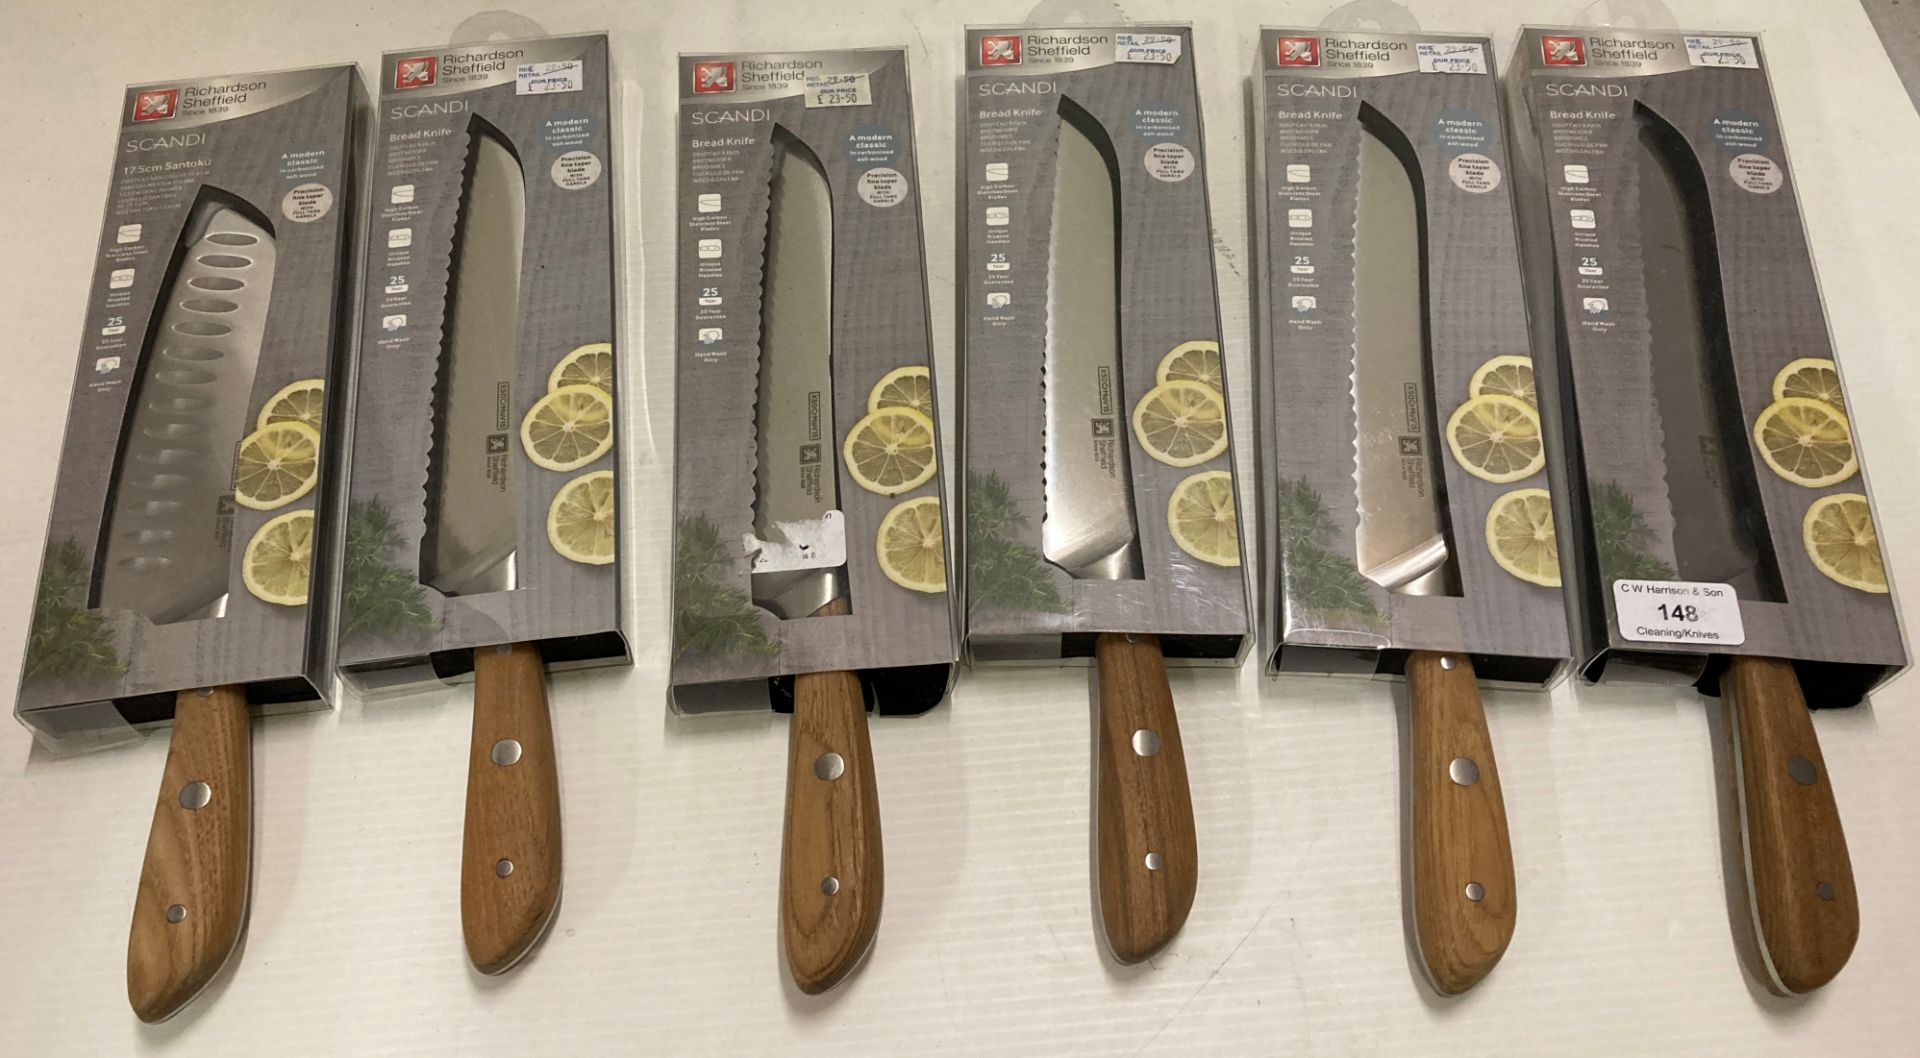 6 x Scandi bread knives (V12)